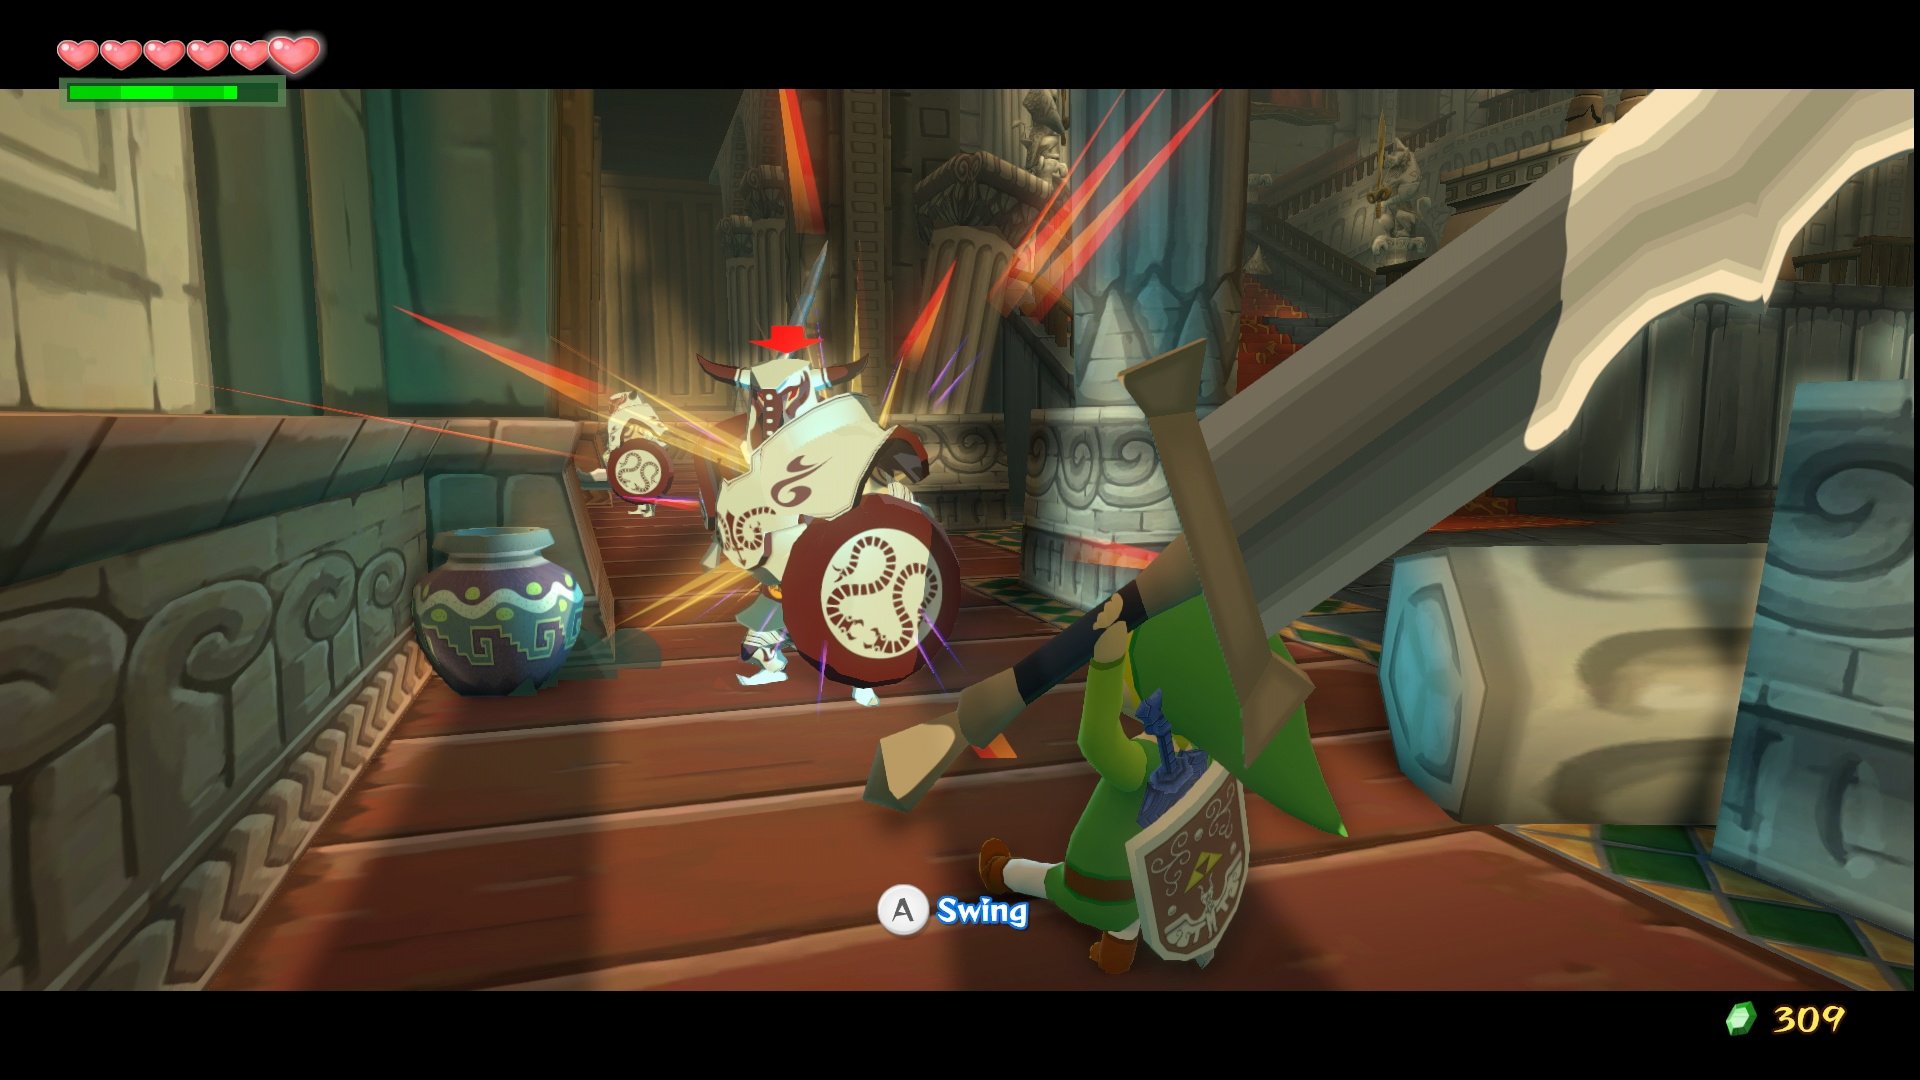 Zelda Wind Waker - Nintendo Wii U - Videogames - Inconfidentes, Contagem  1245840792